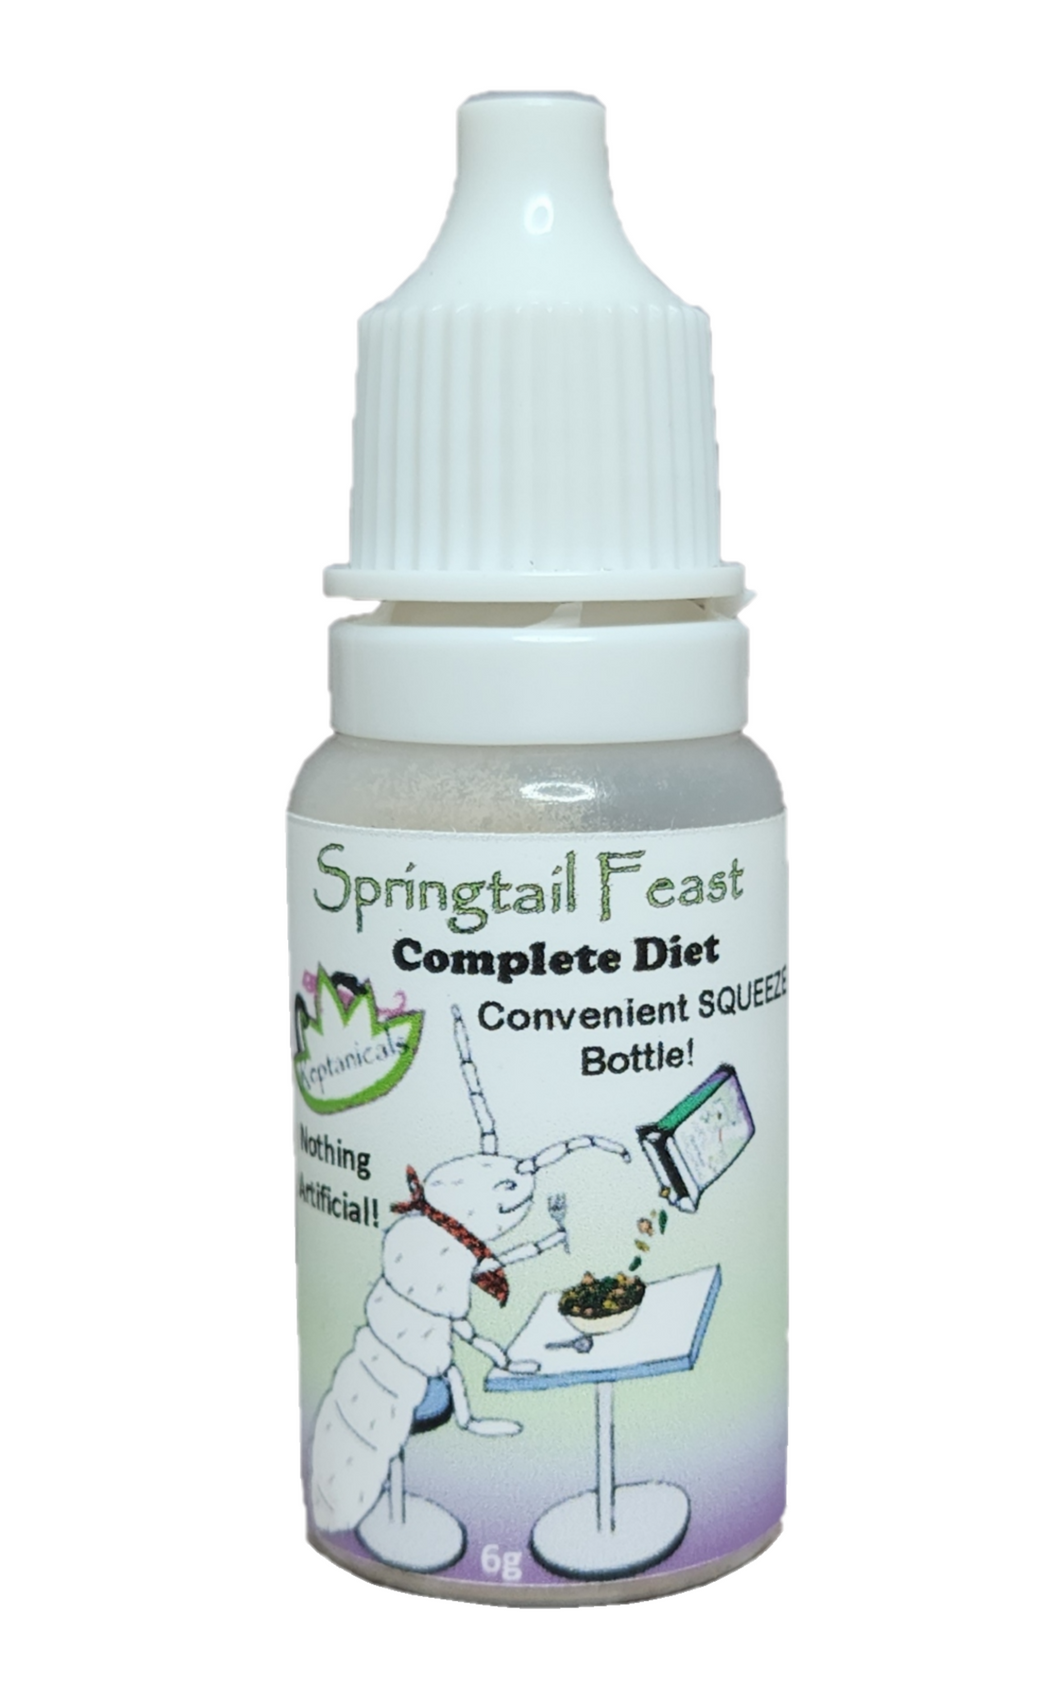 Springtail Feast Bottle